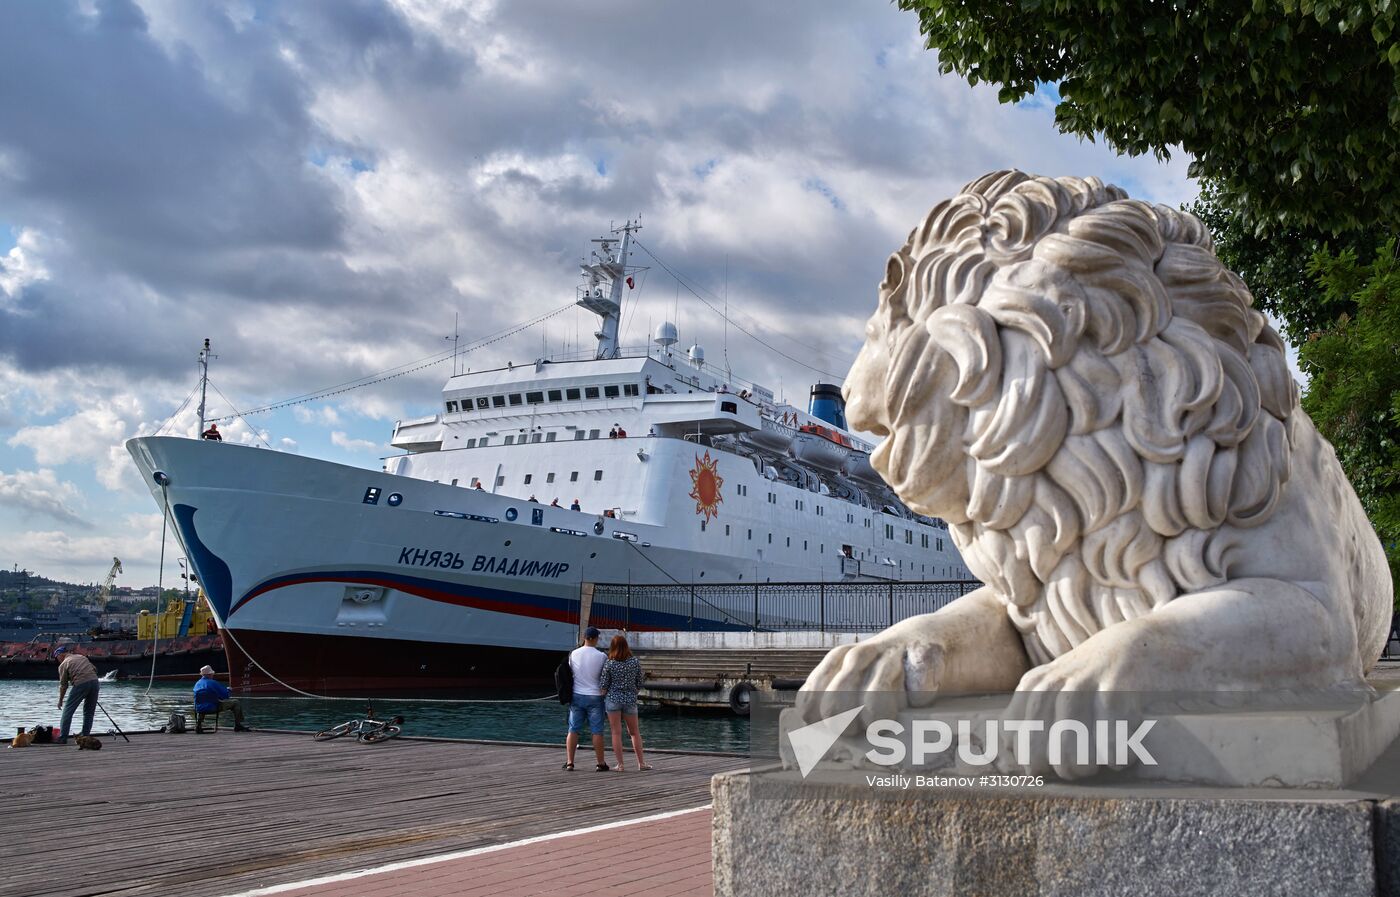 Prince Vladimir cruise liner arrives in Sevastopol